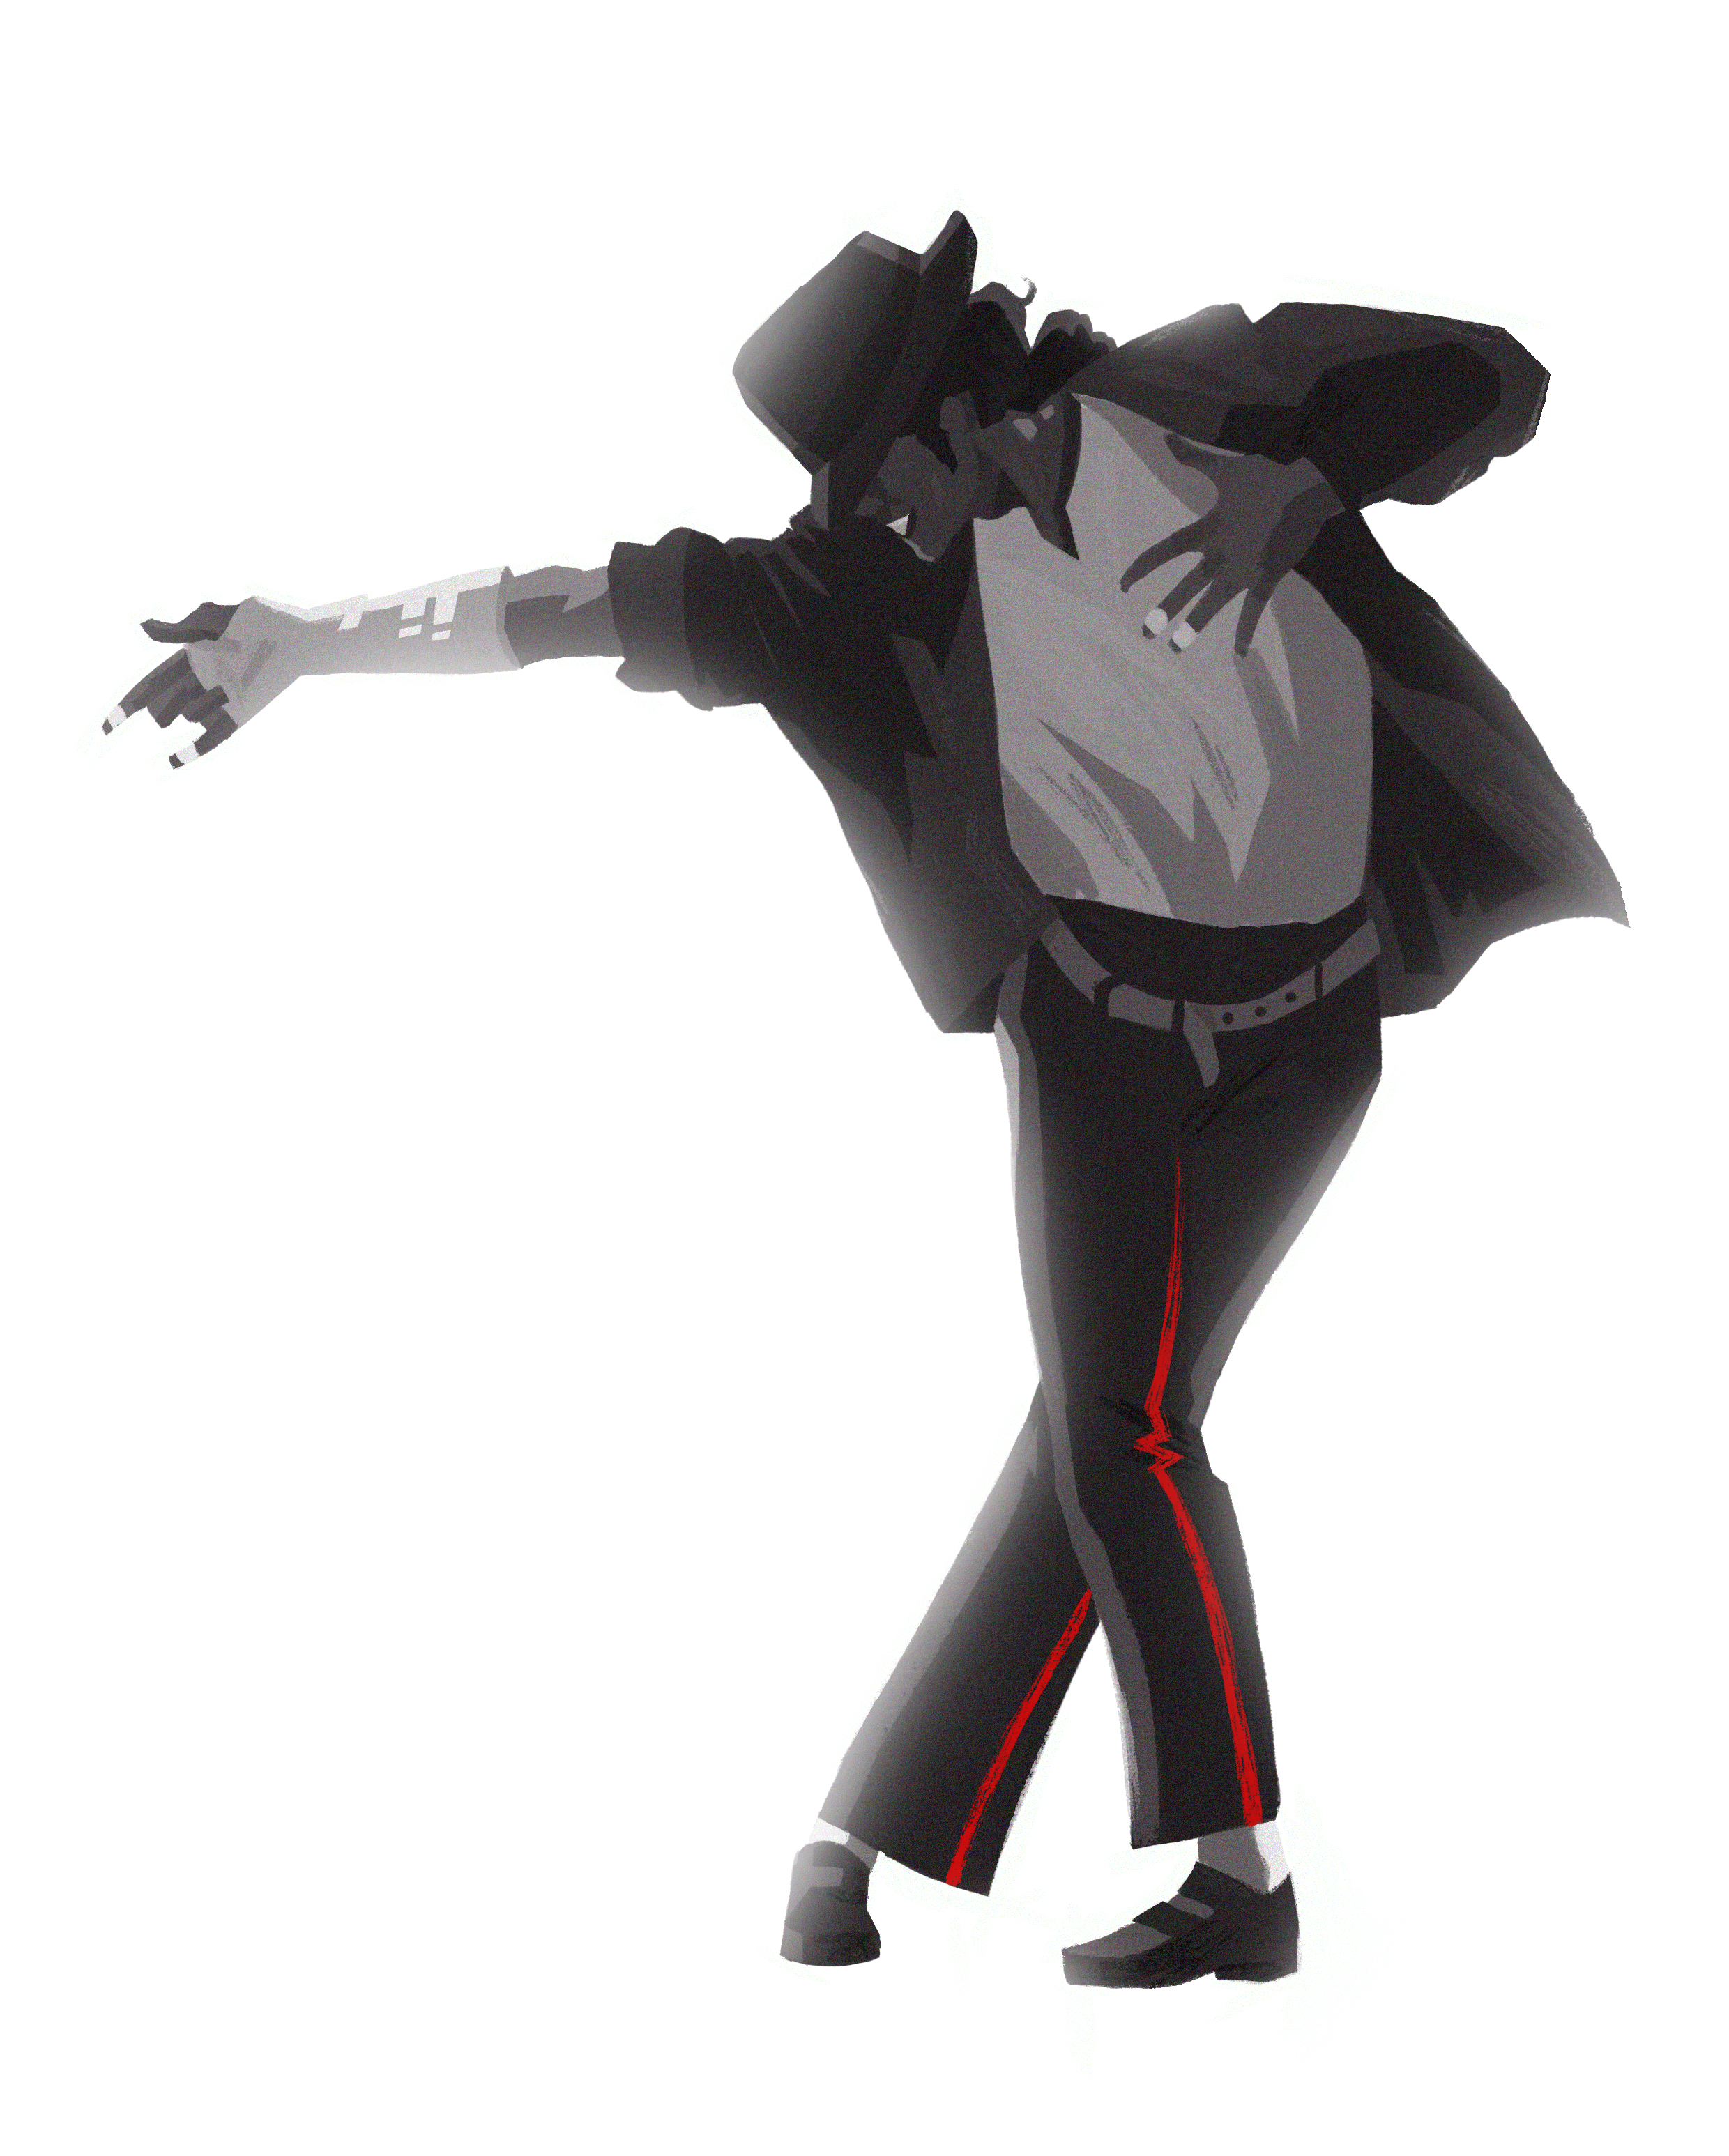 My tribute to Michael Jackson